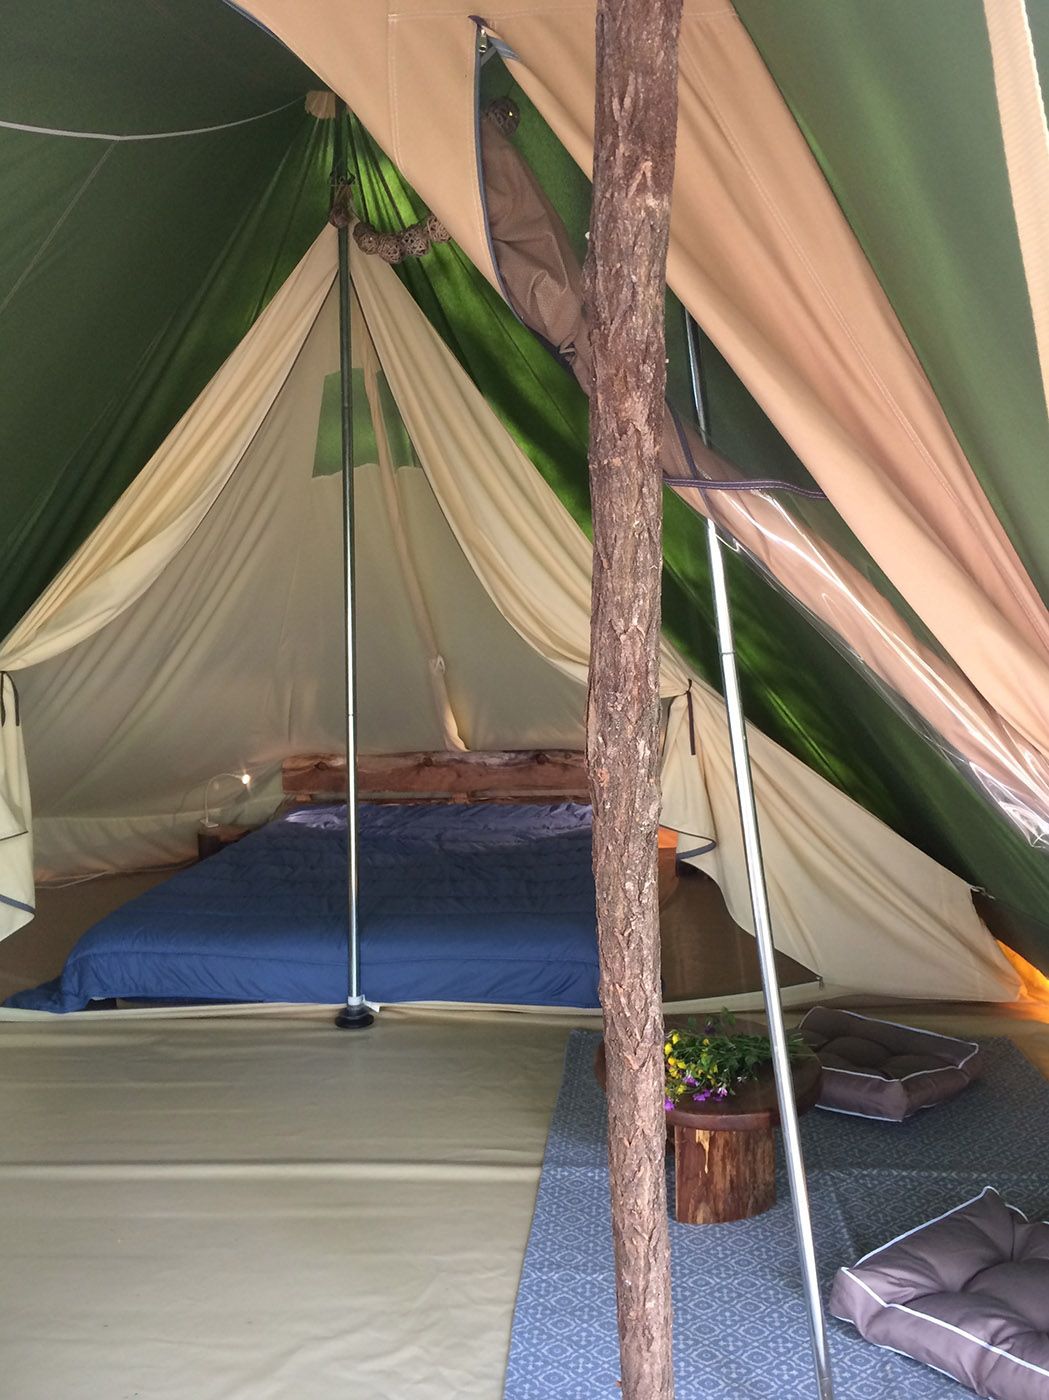 The Castor Tent